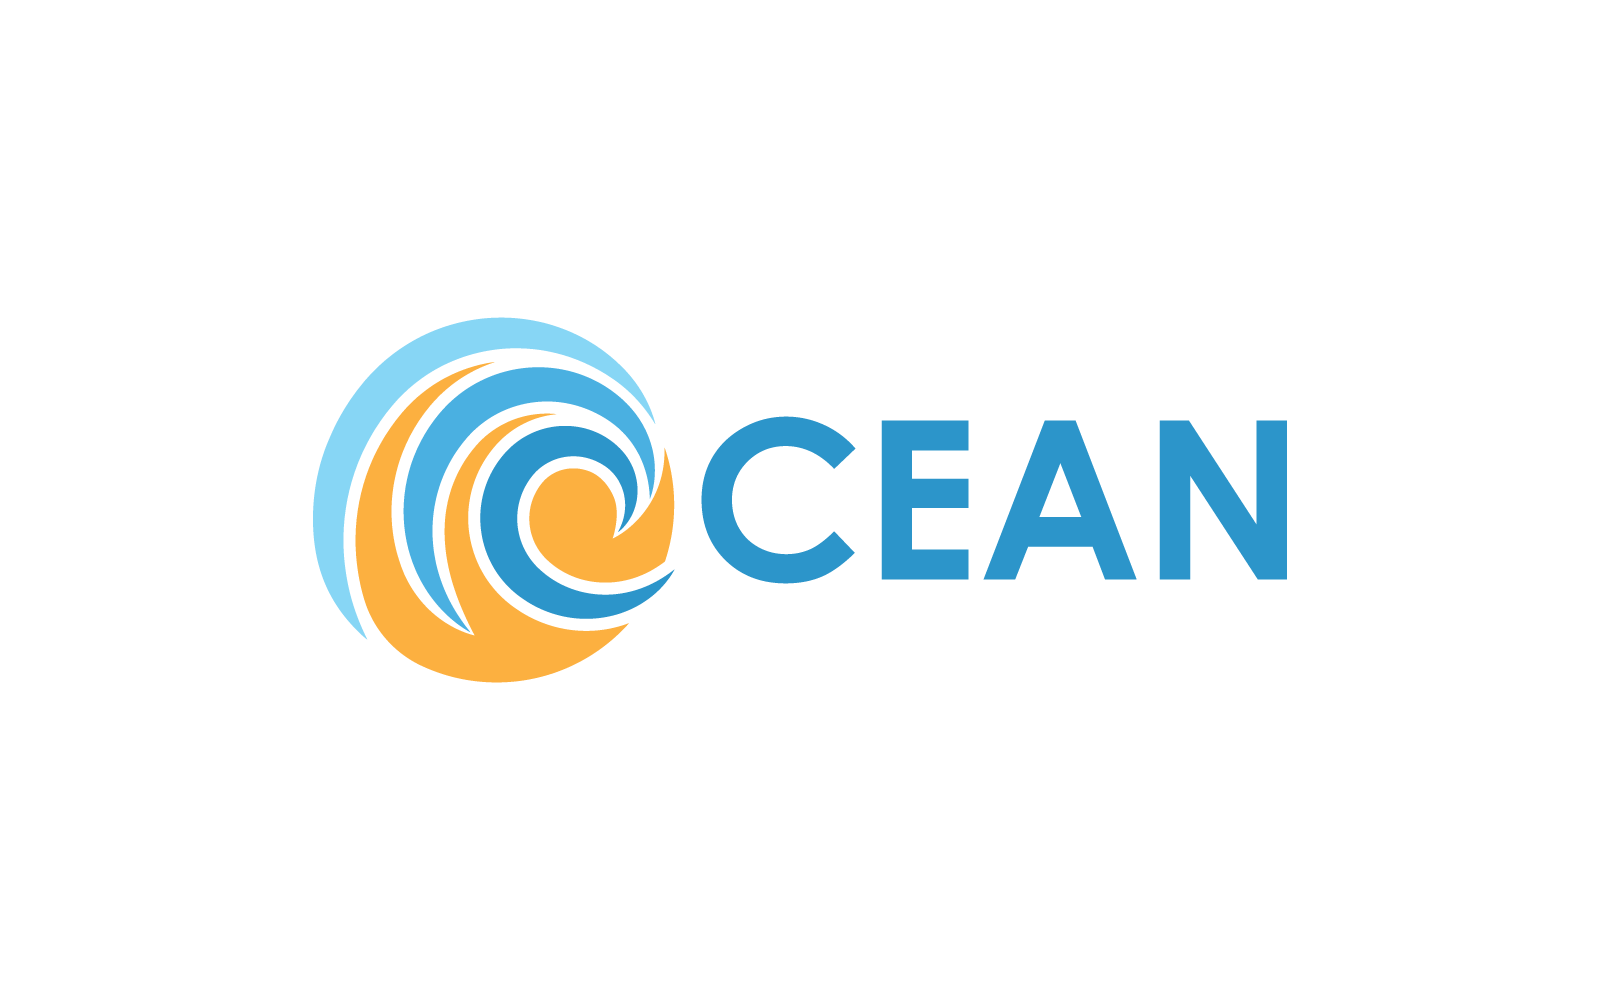 Abstract Wave ocean logo design per modello di business